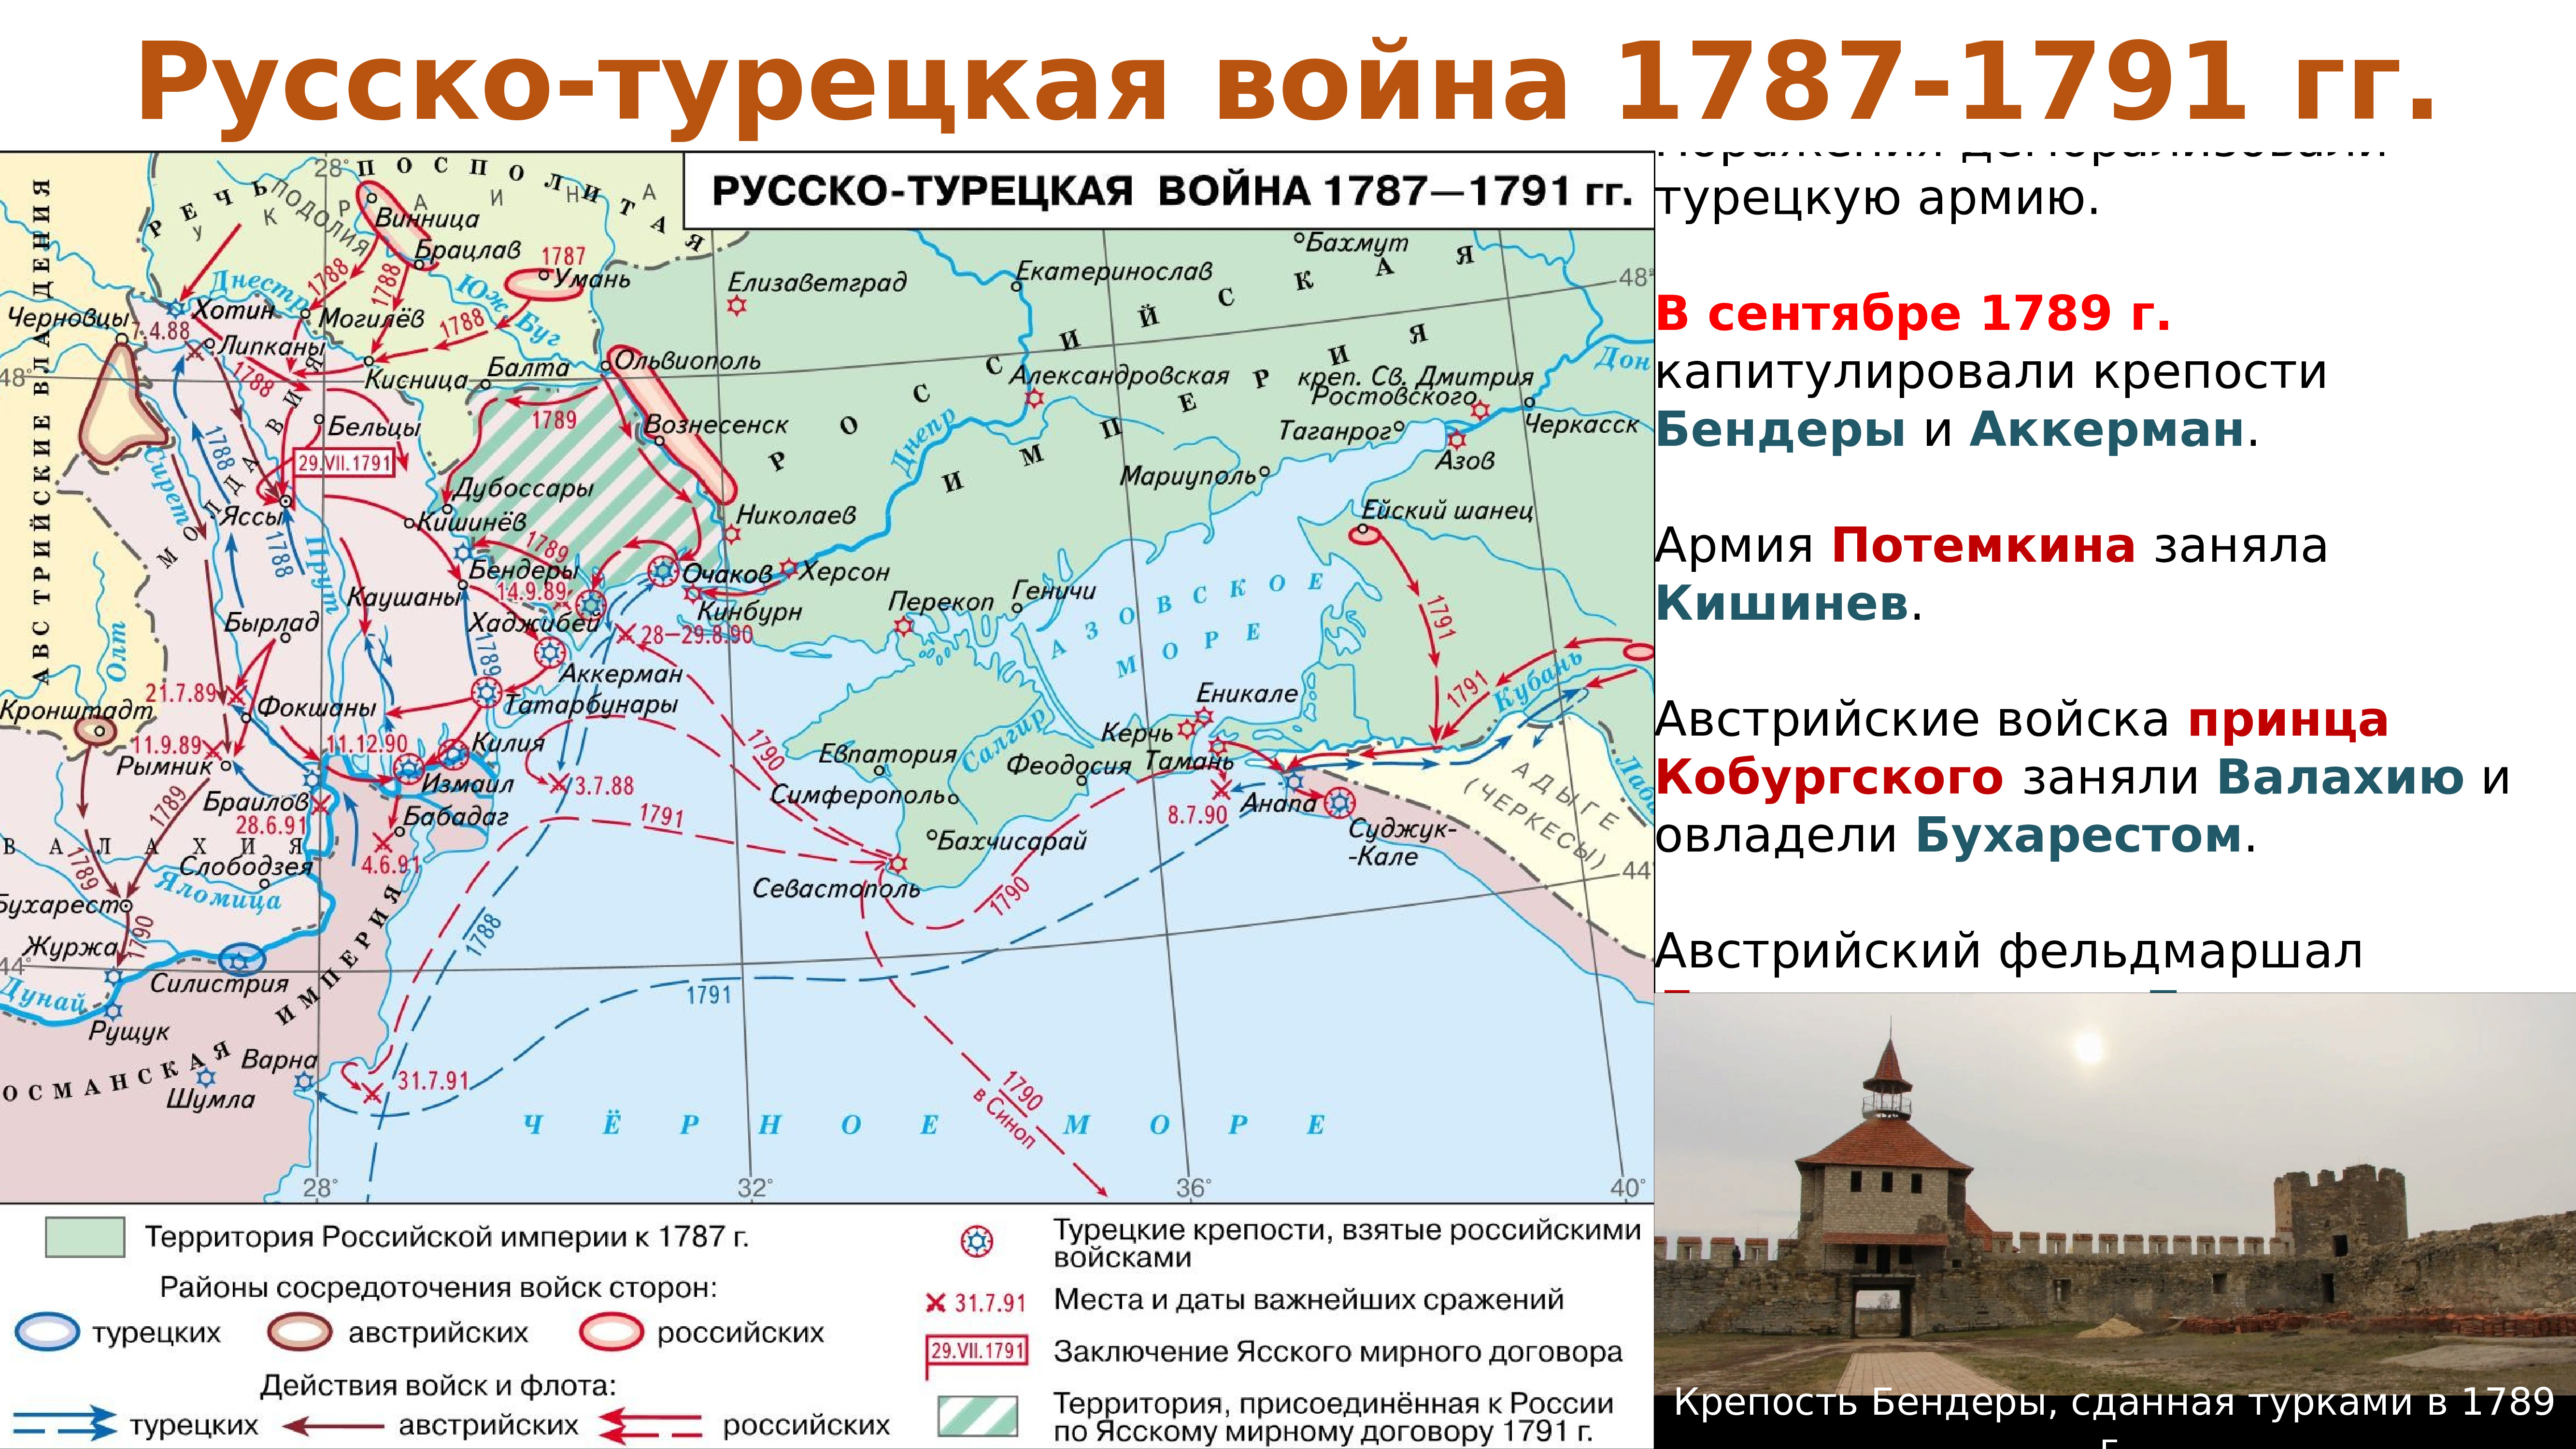 Транспортные пути при екатерине 2. Карта при Российской империи при Екатерине 2.